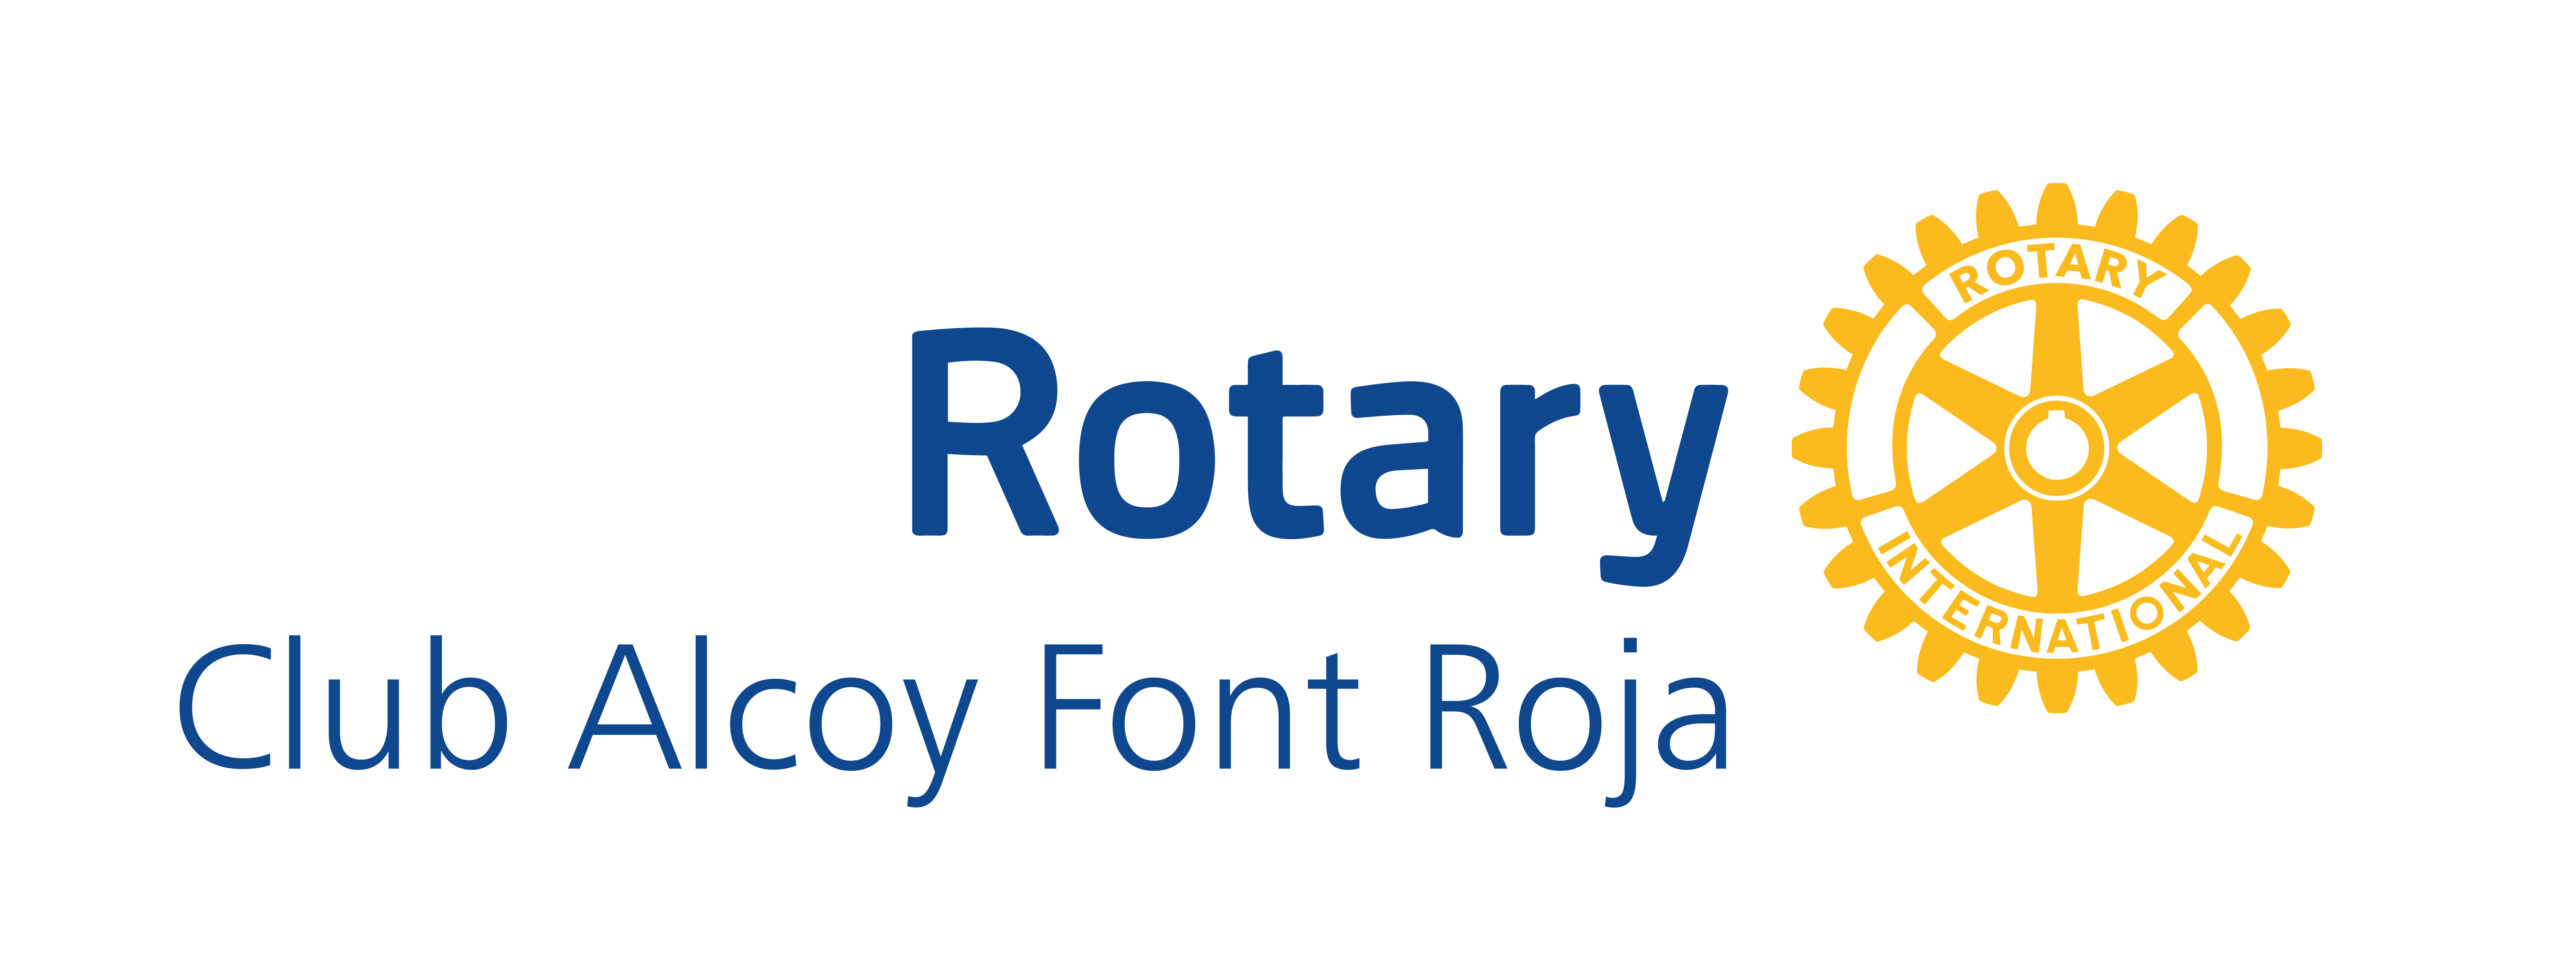 Rotary Club Alcoy Font Roja